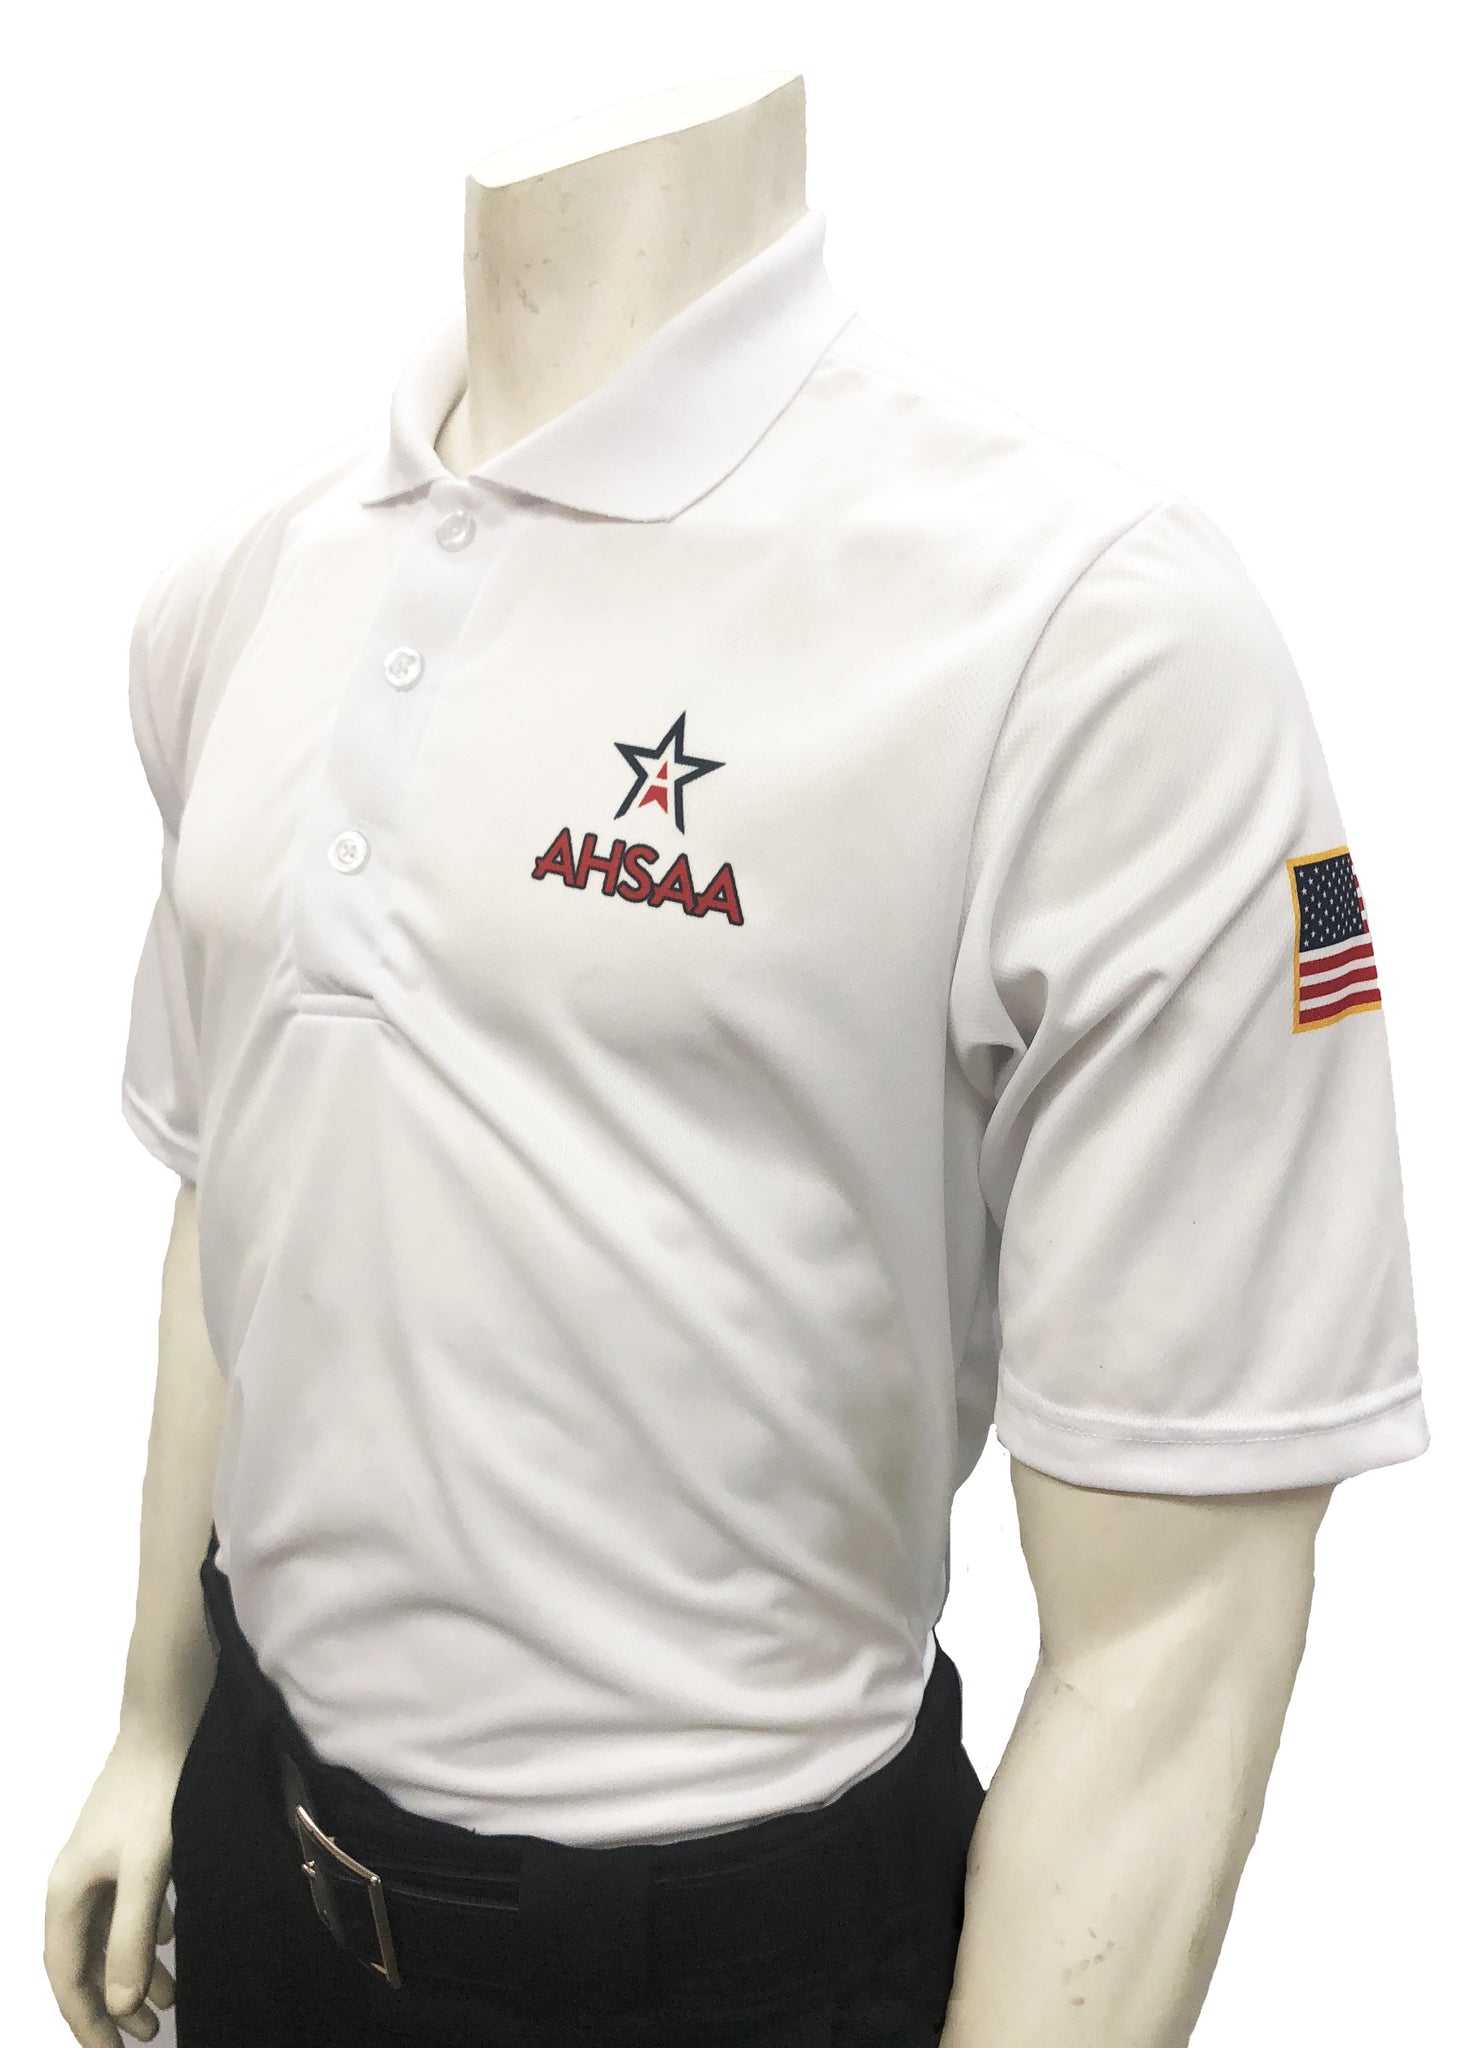 USA451AL - Smitty "Made in USA" - Track Men's Short Sleeve Shirt